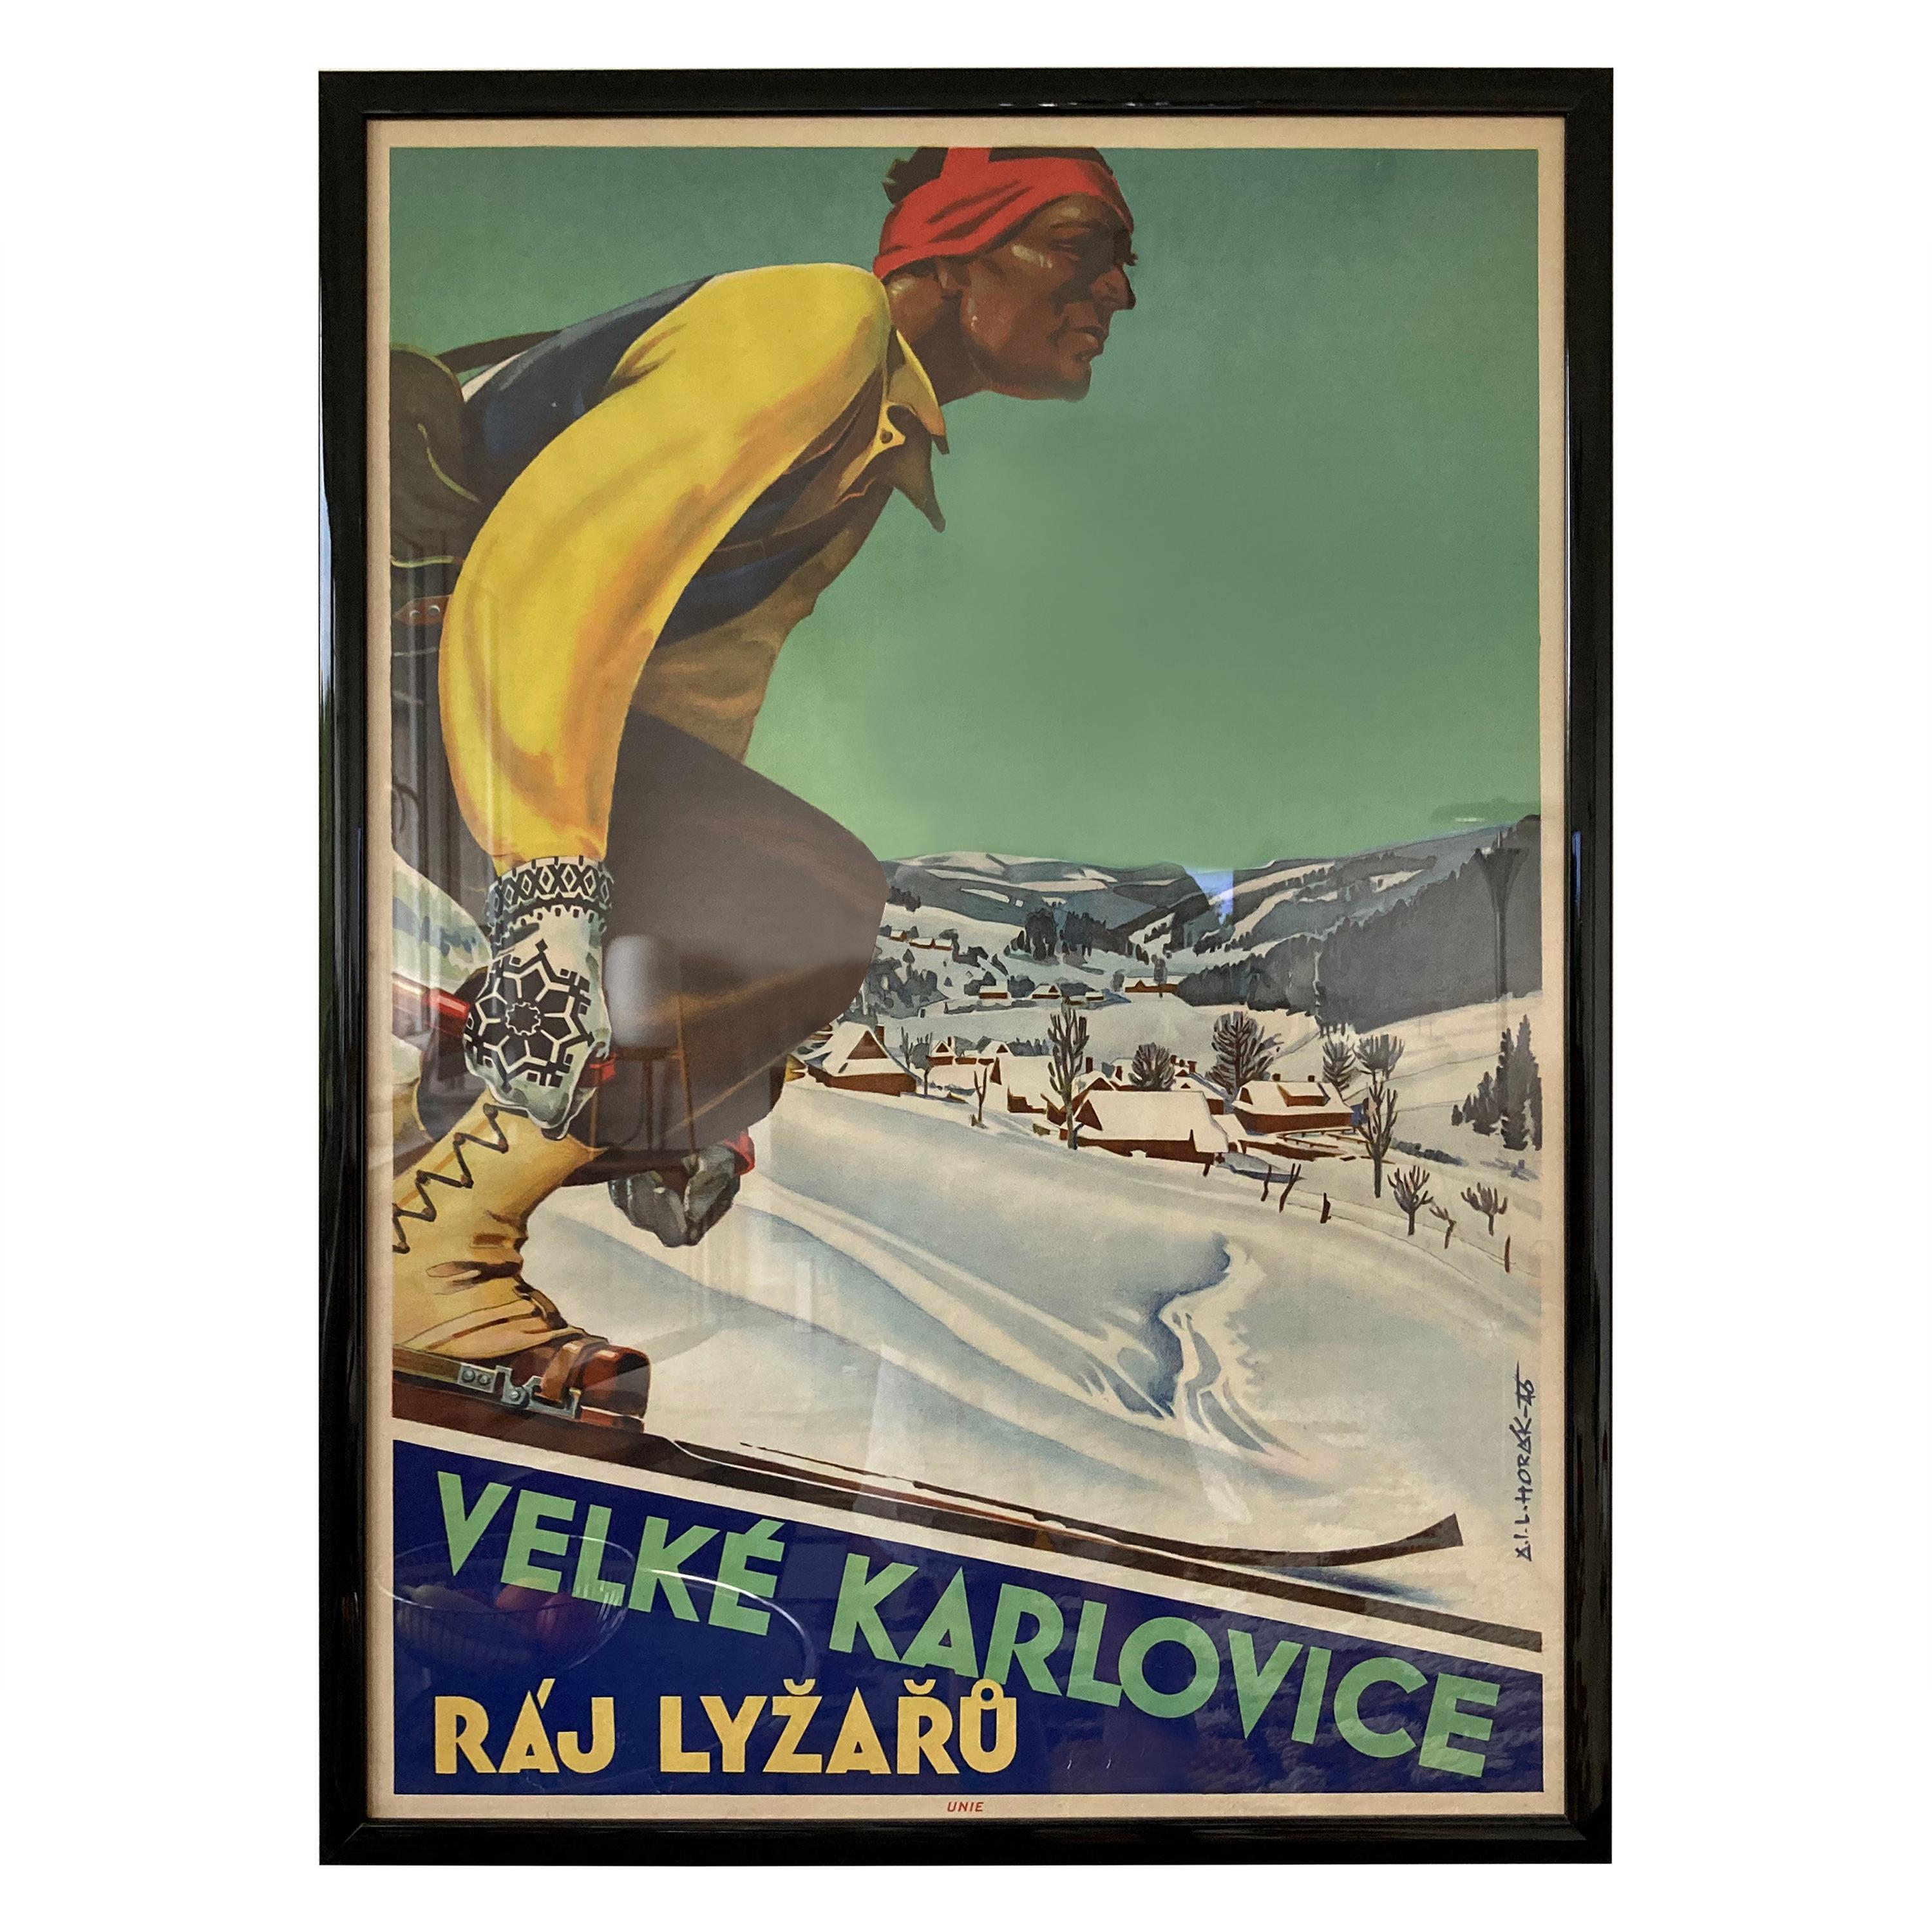 Old Original Art Deco Skier / Ski Resort Advertising Poster, 1930s